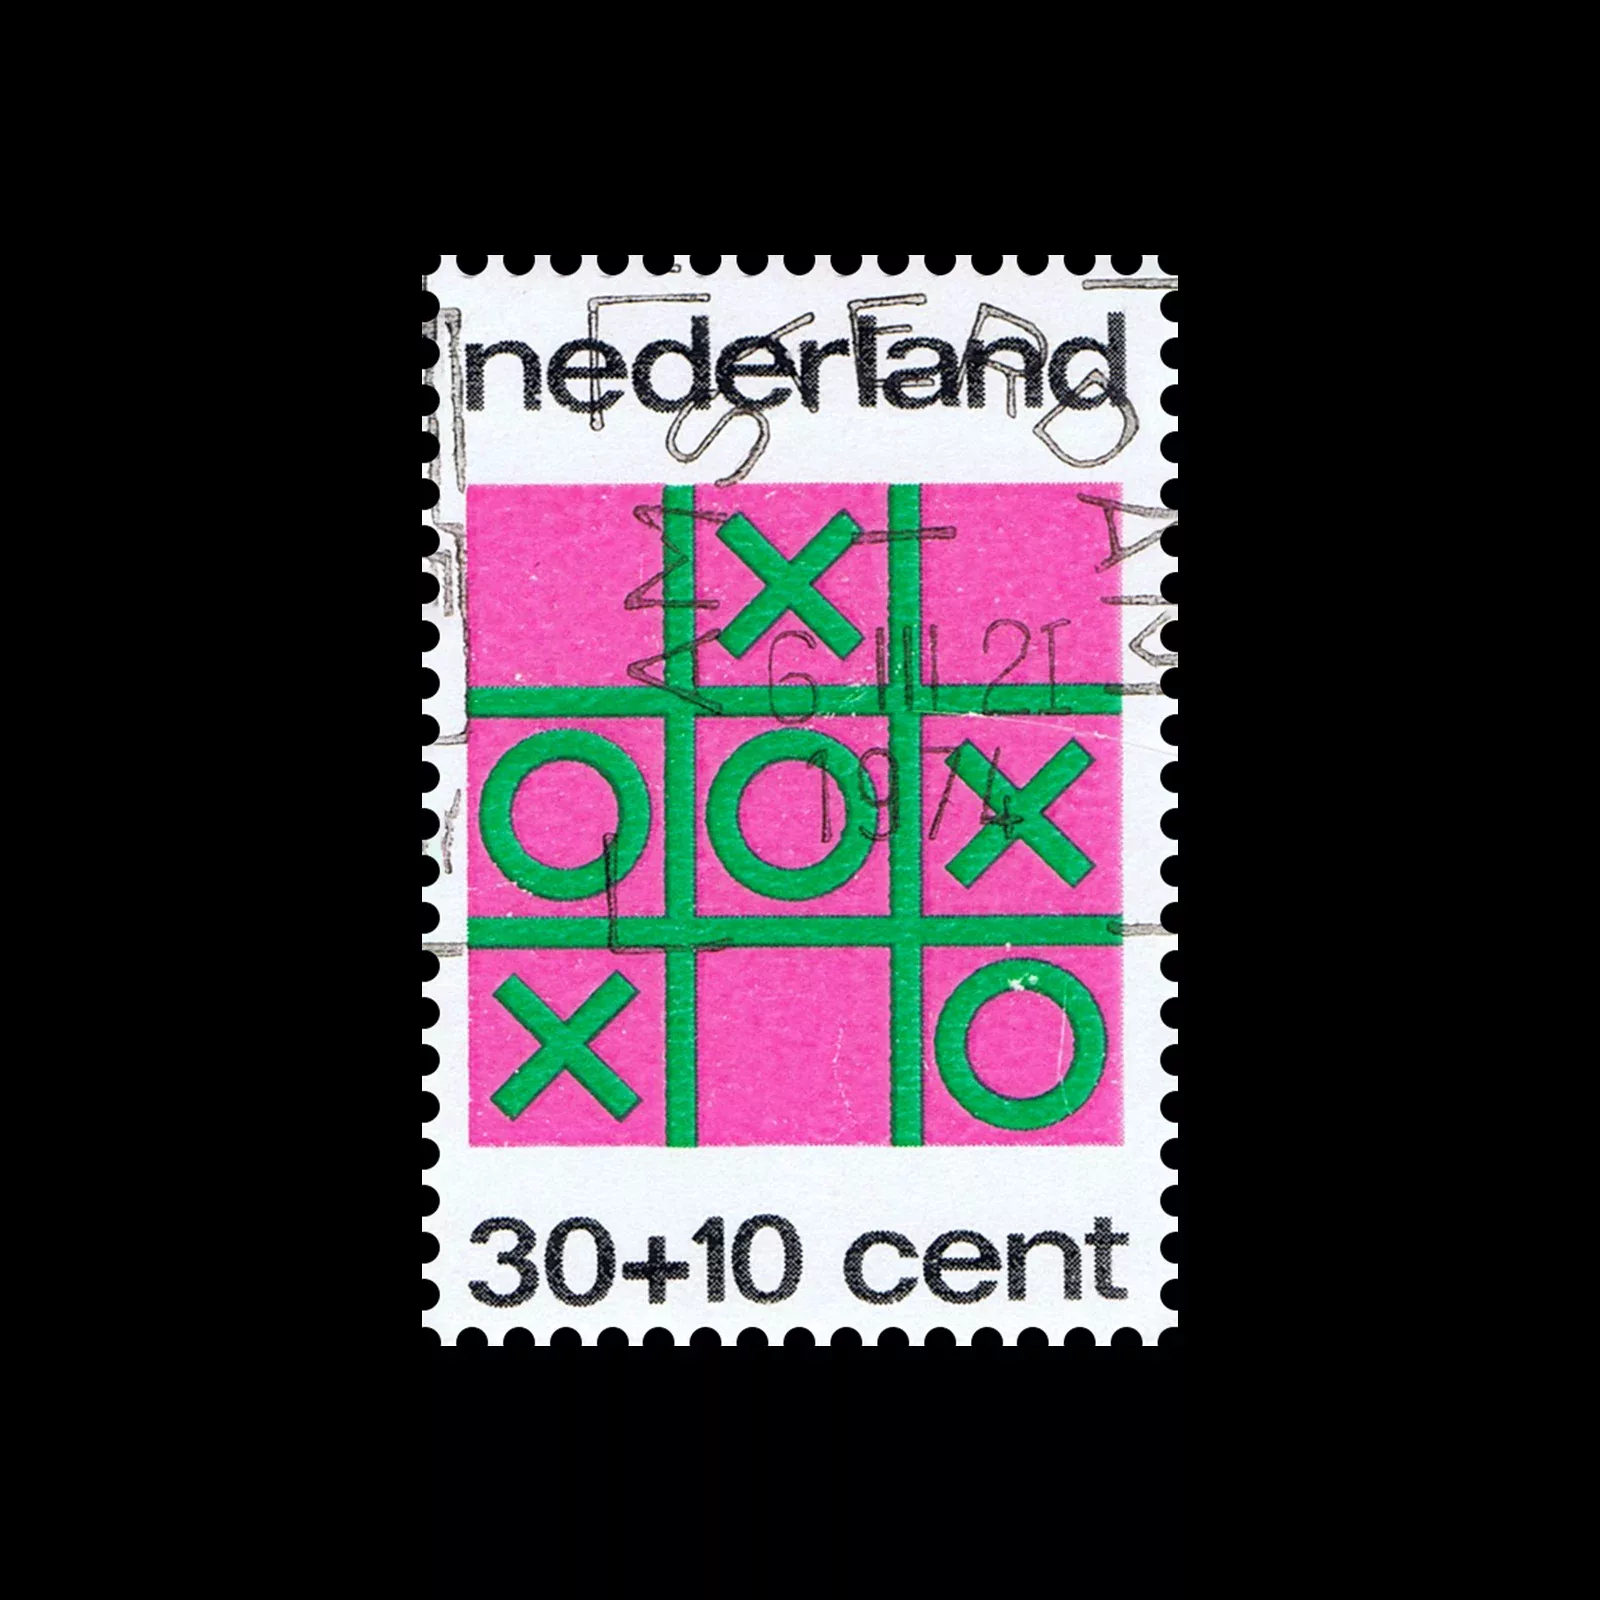 Child Welfare, Netherlands Stamps, 1973. Designed by F. Hazelebach.